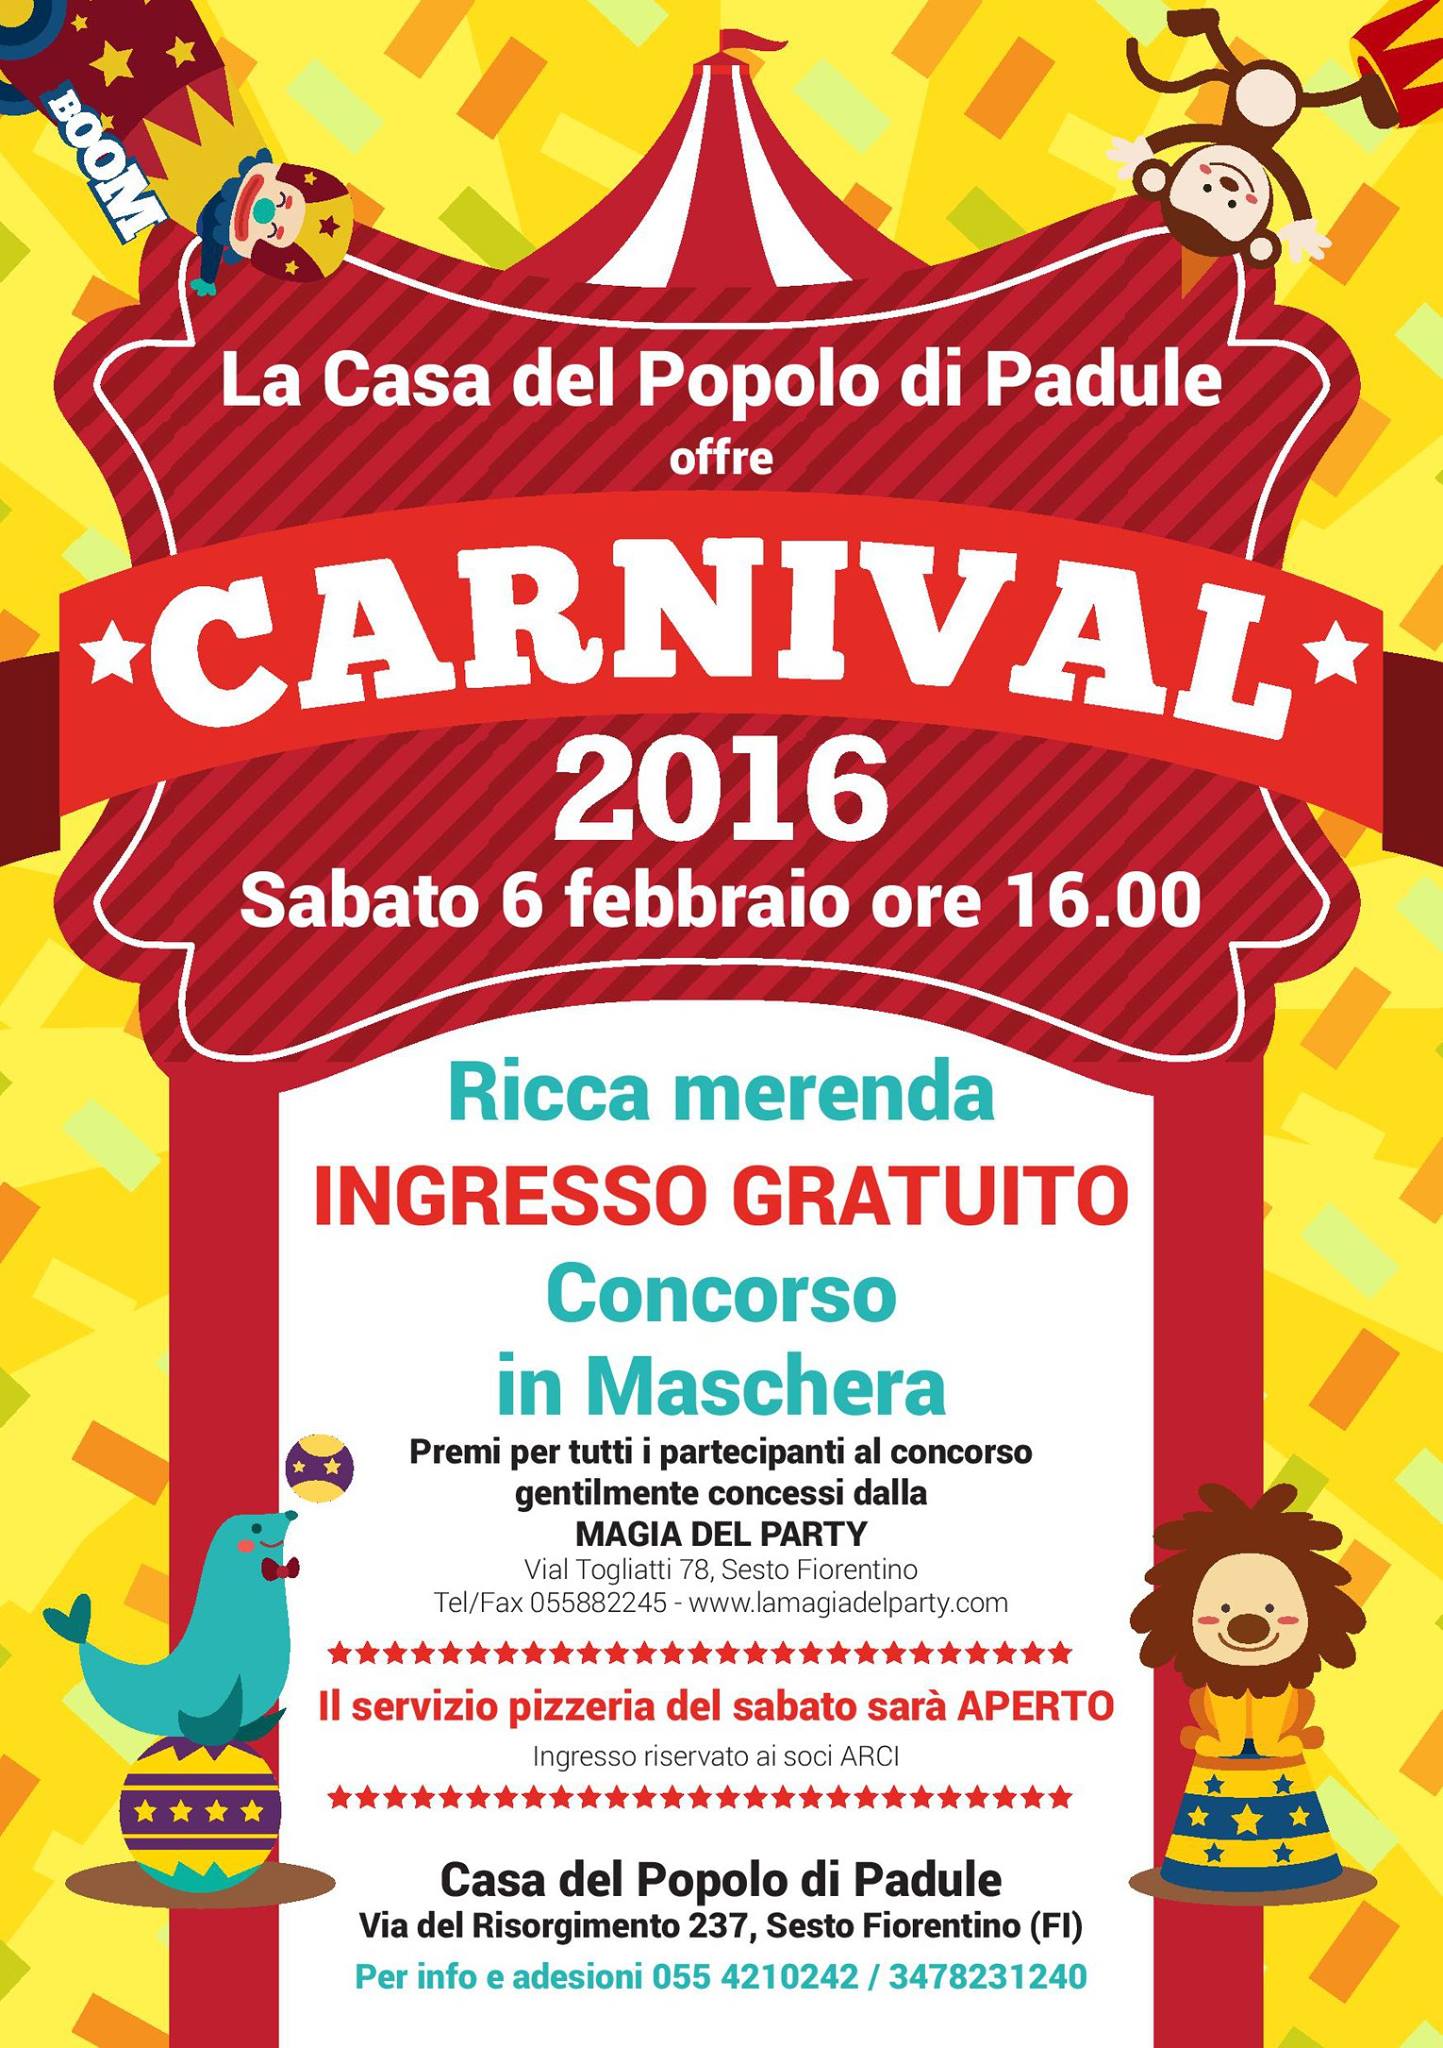 Carnevale 2016 locandina padule